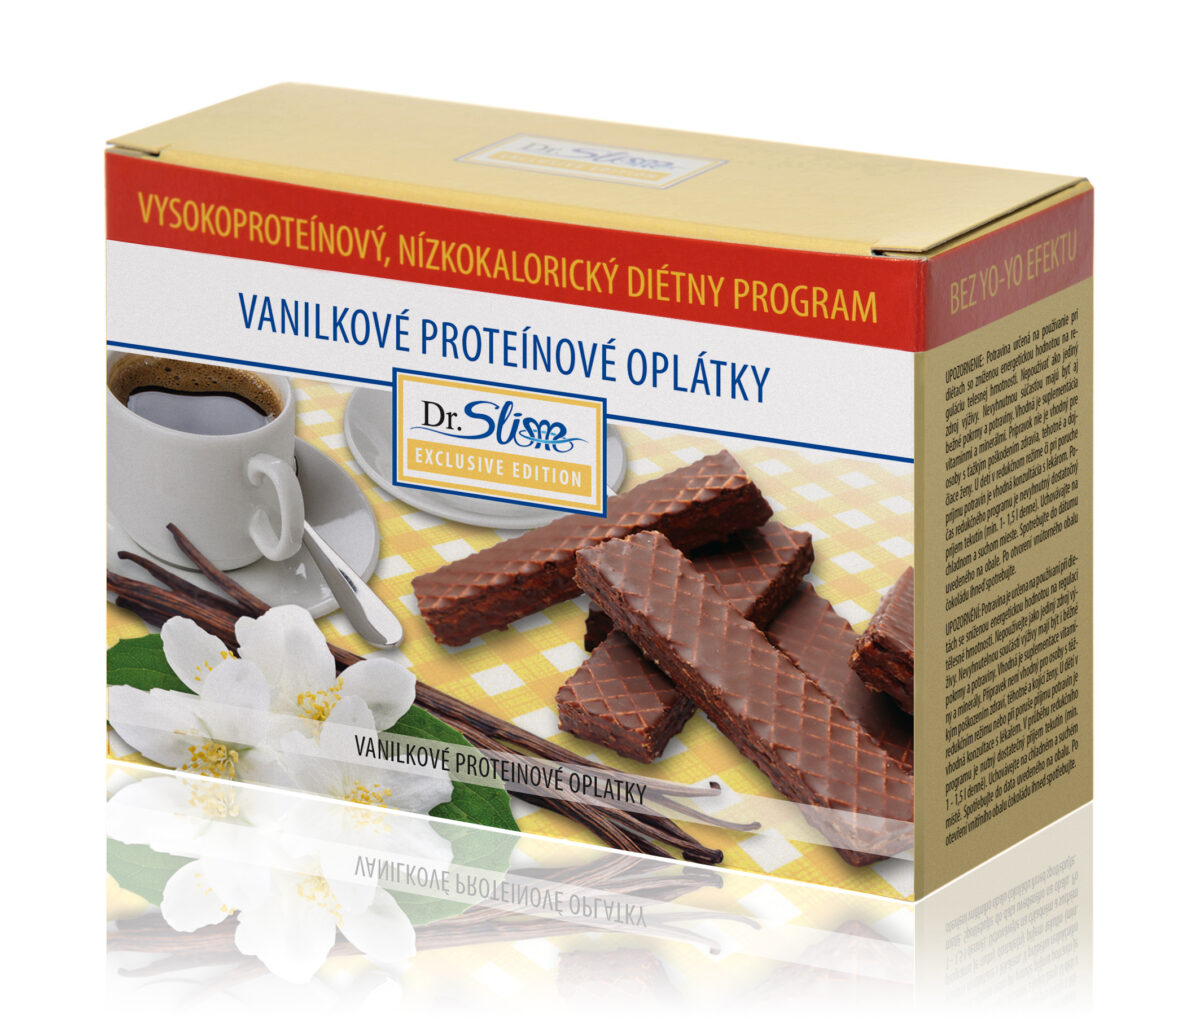 Vanilkové proteínové oplátky